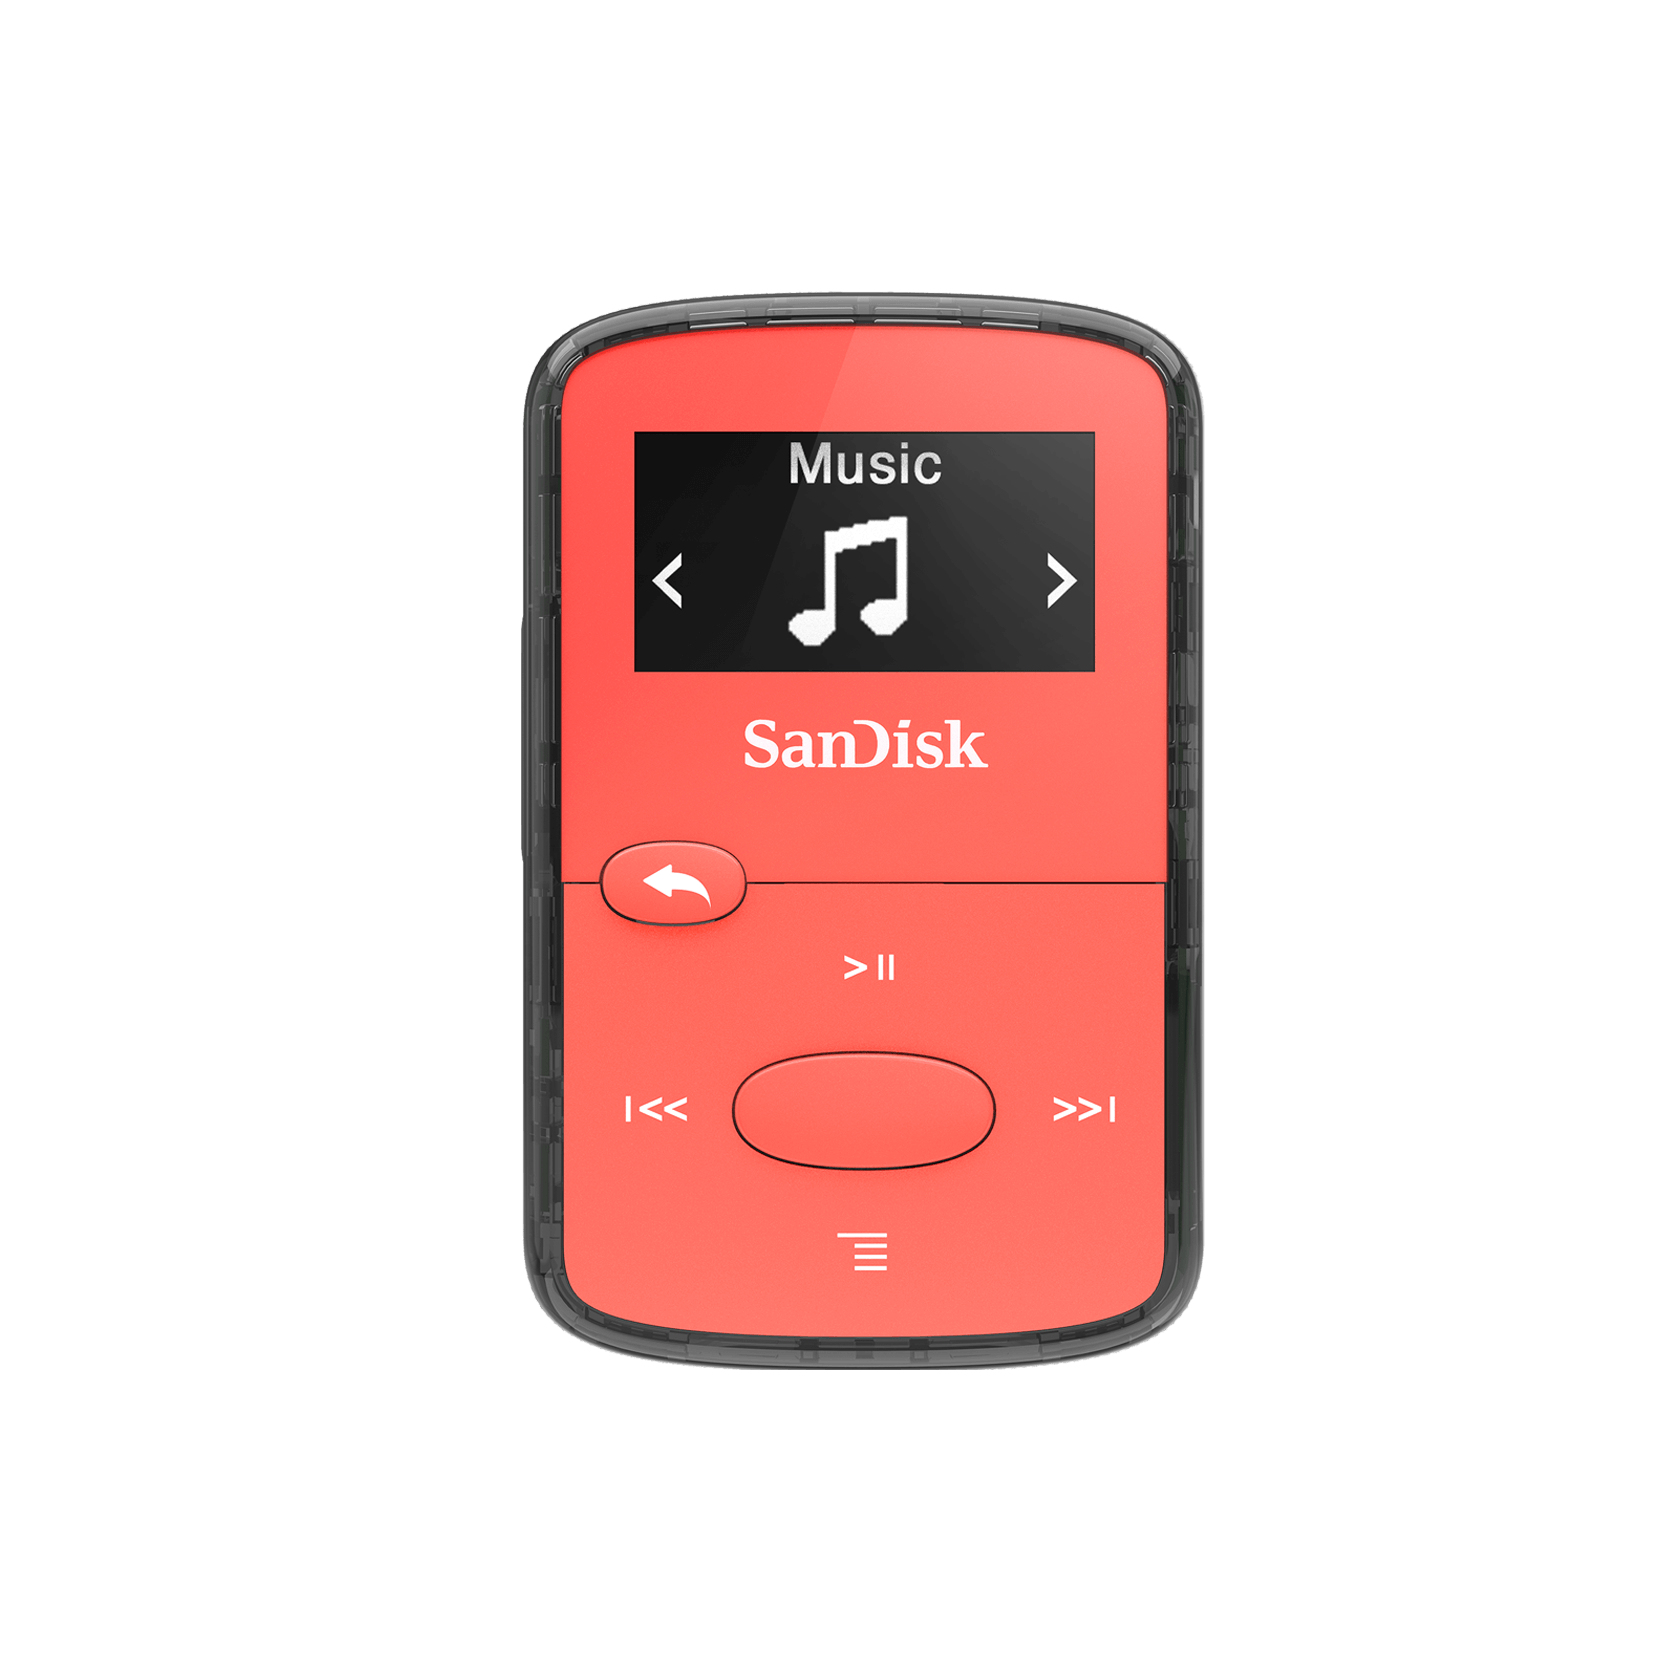 SanDisk Clip Jam MP3 player 8 GB Red